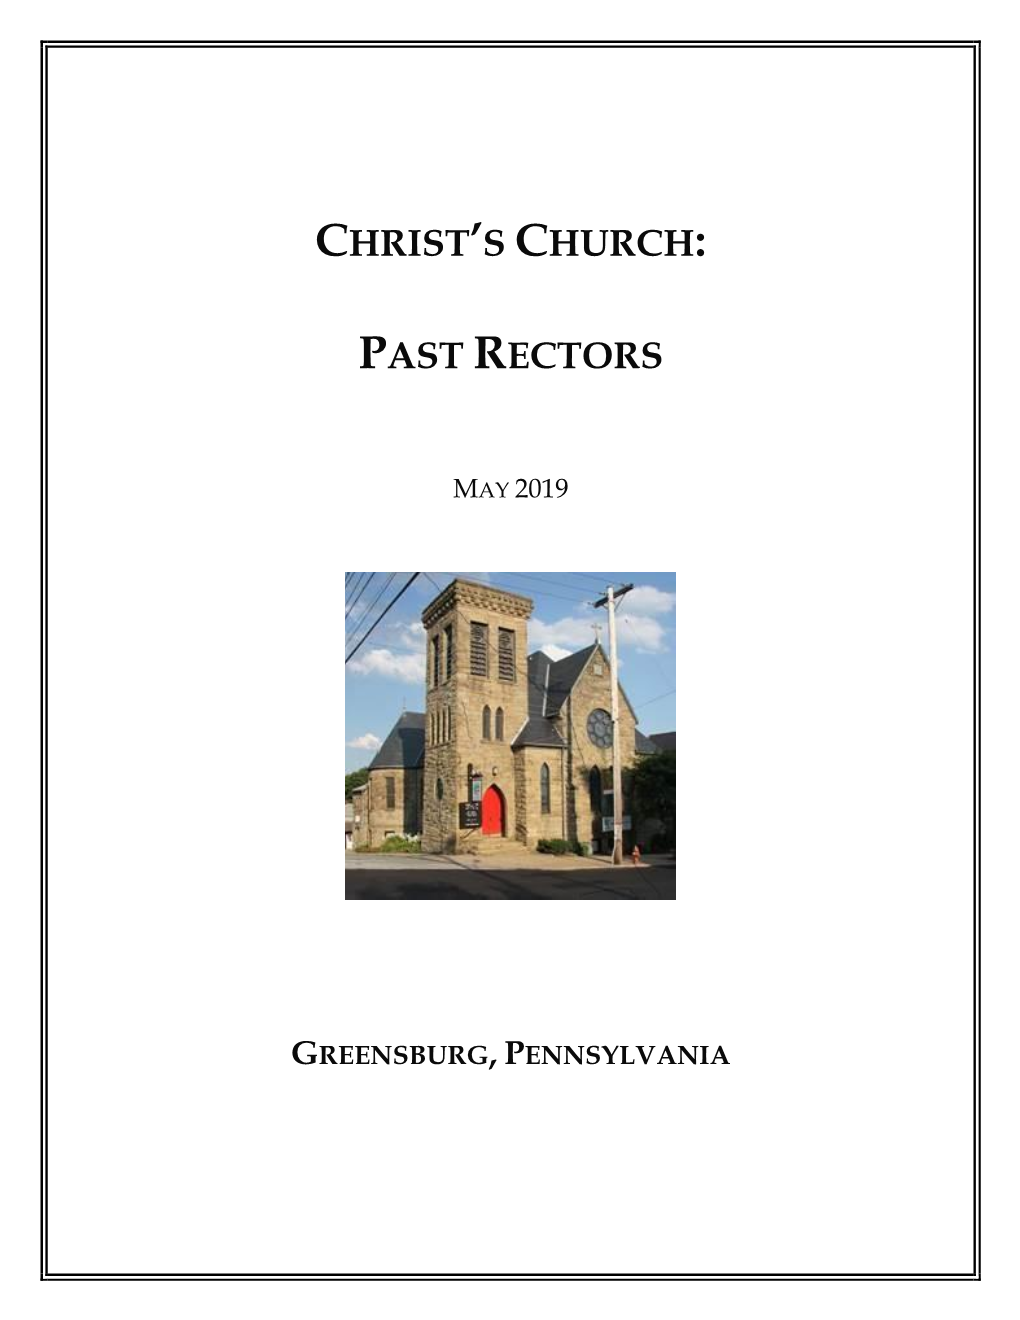 Christ's Church: Past Rectors